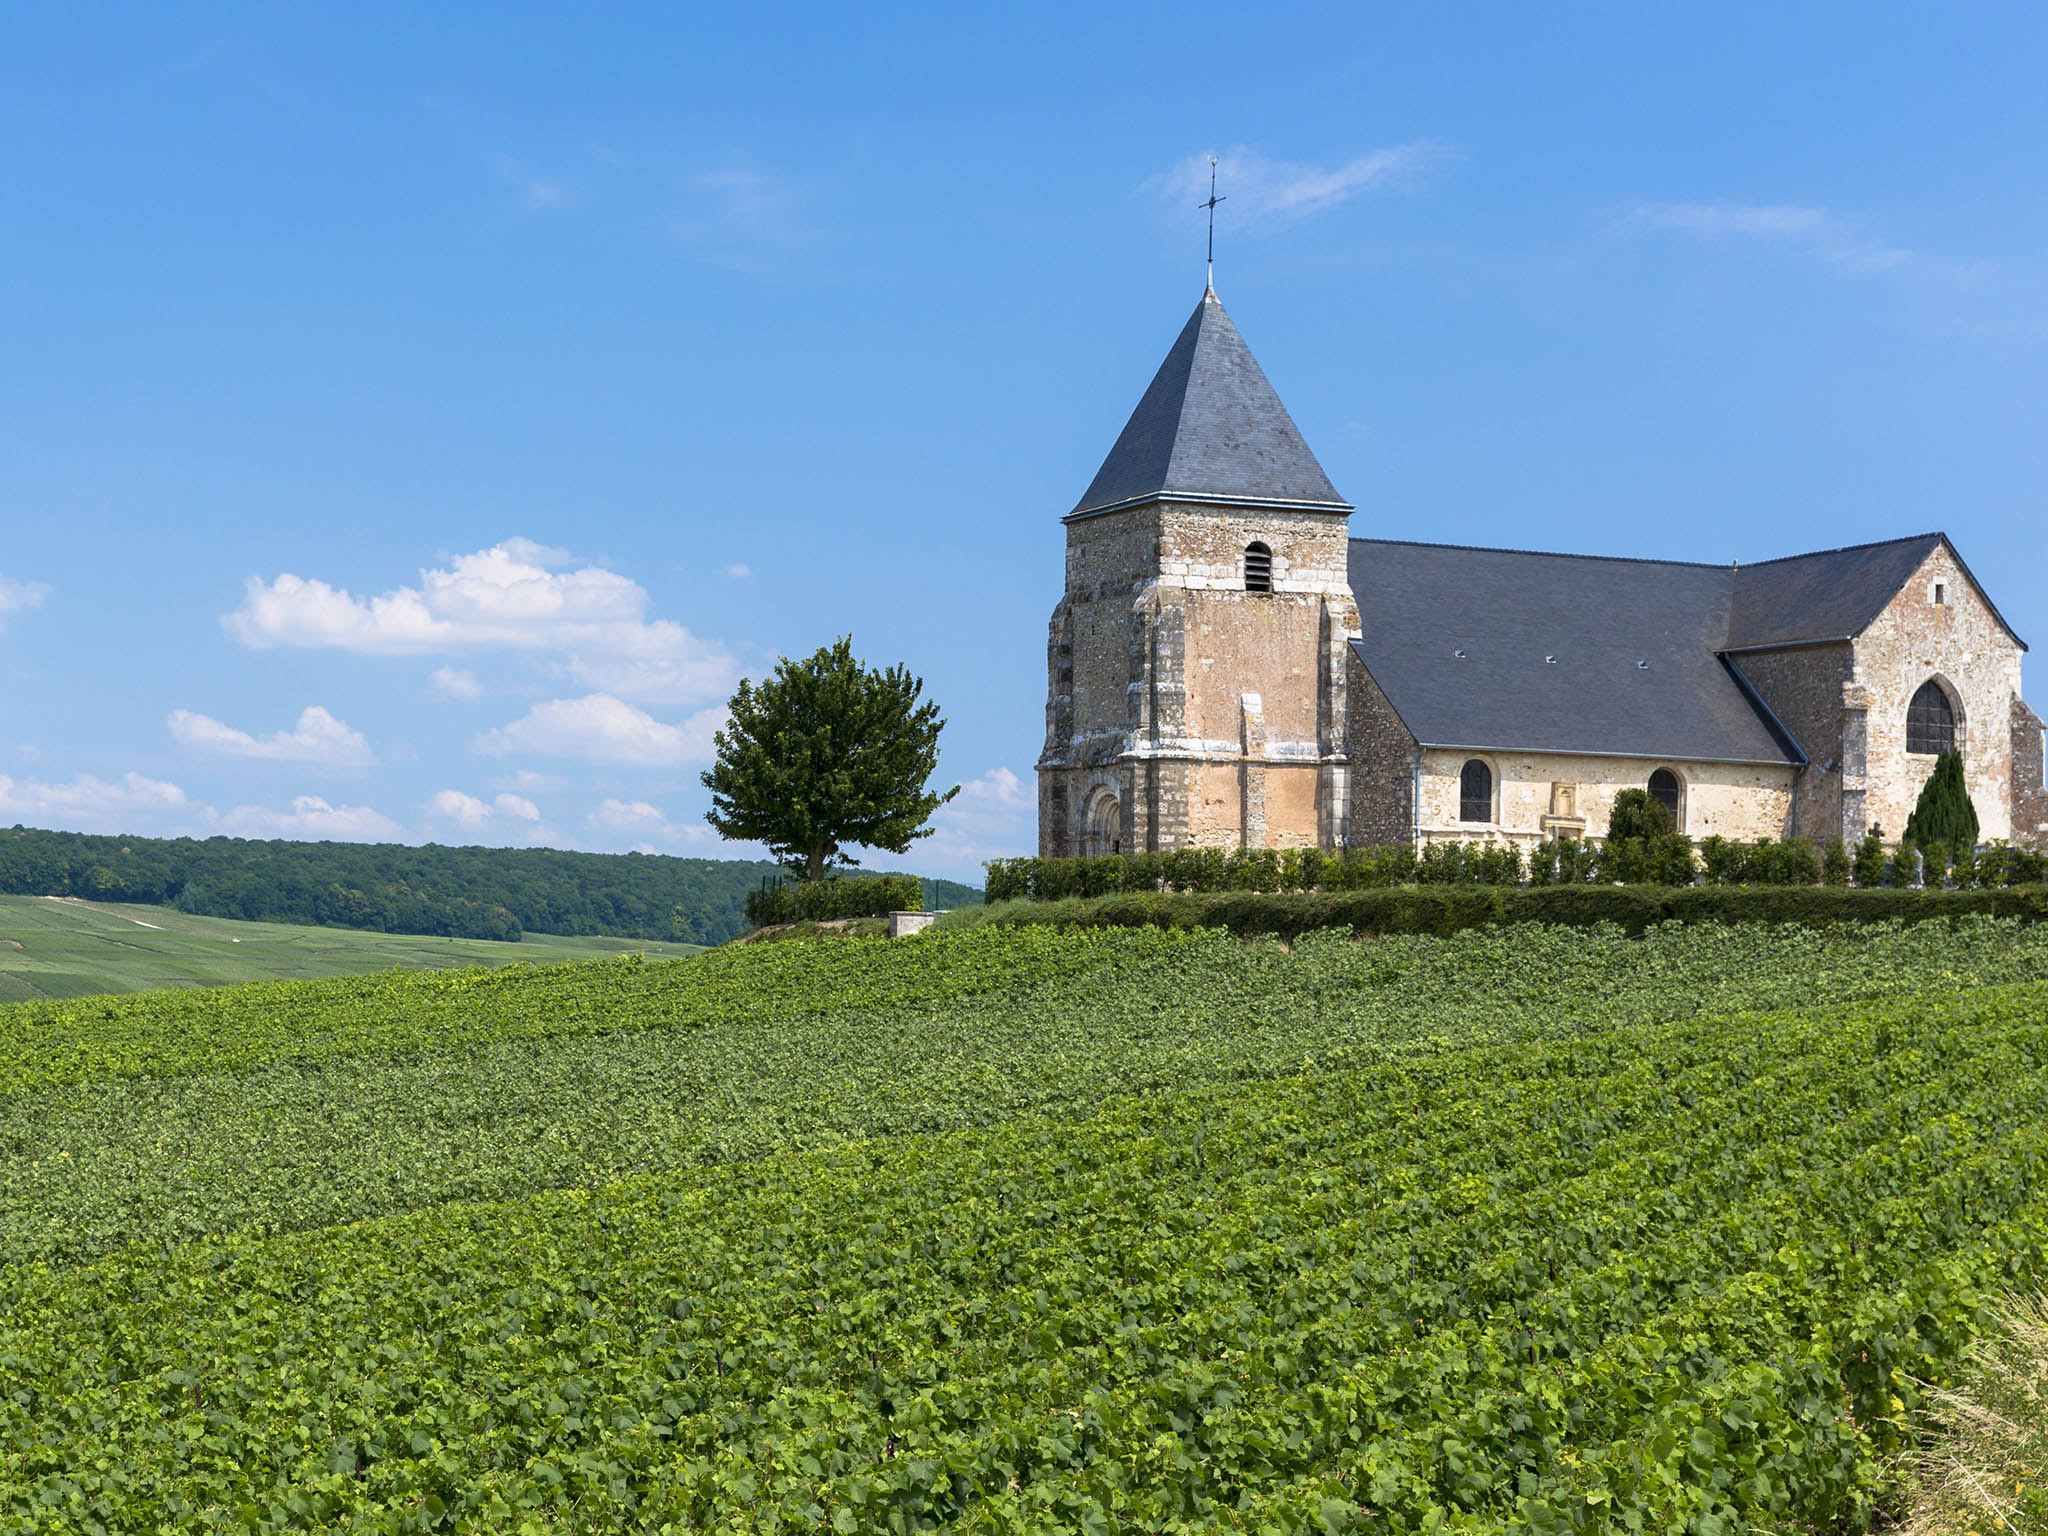 L’Eglise de Chavot, the 12th-century church in Marne, Champagne-Ardenne